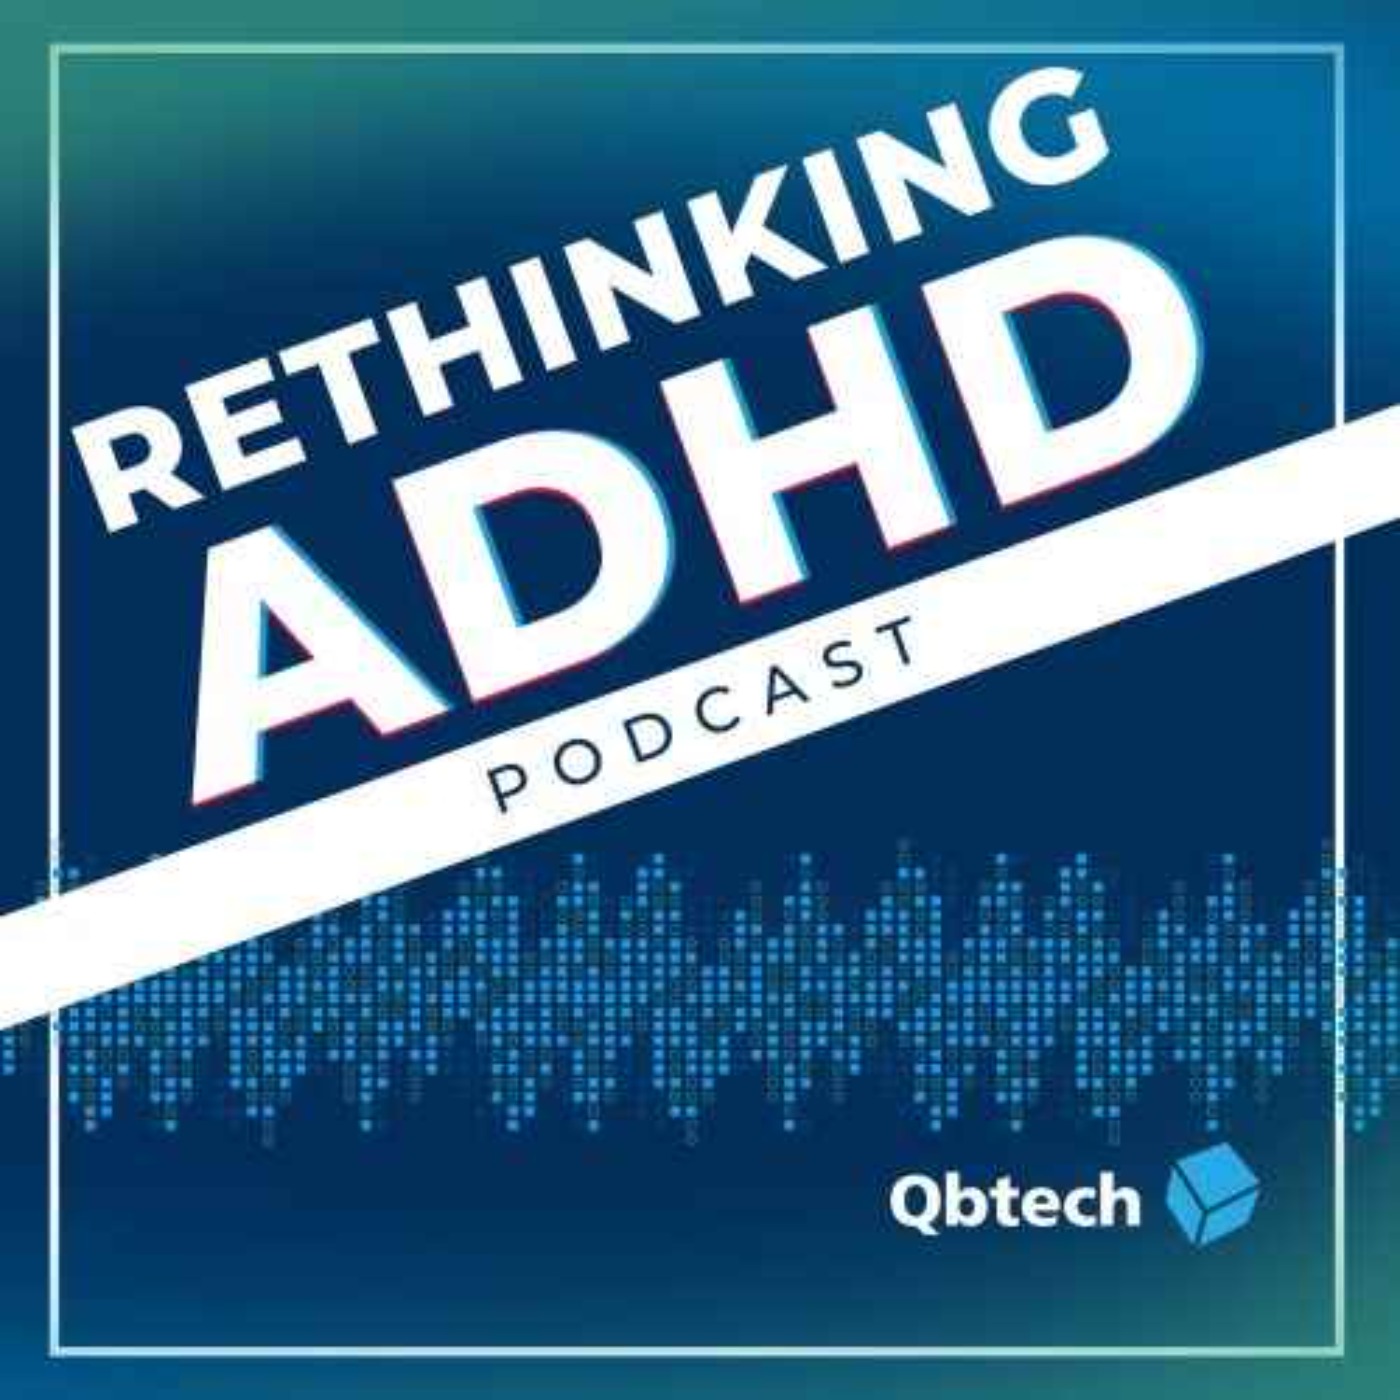 Rethinking ADHD - Introduction